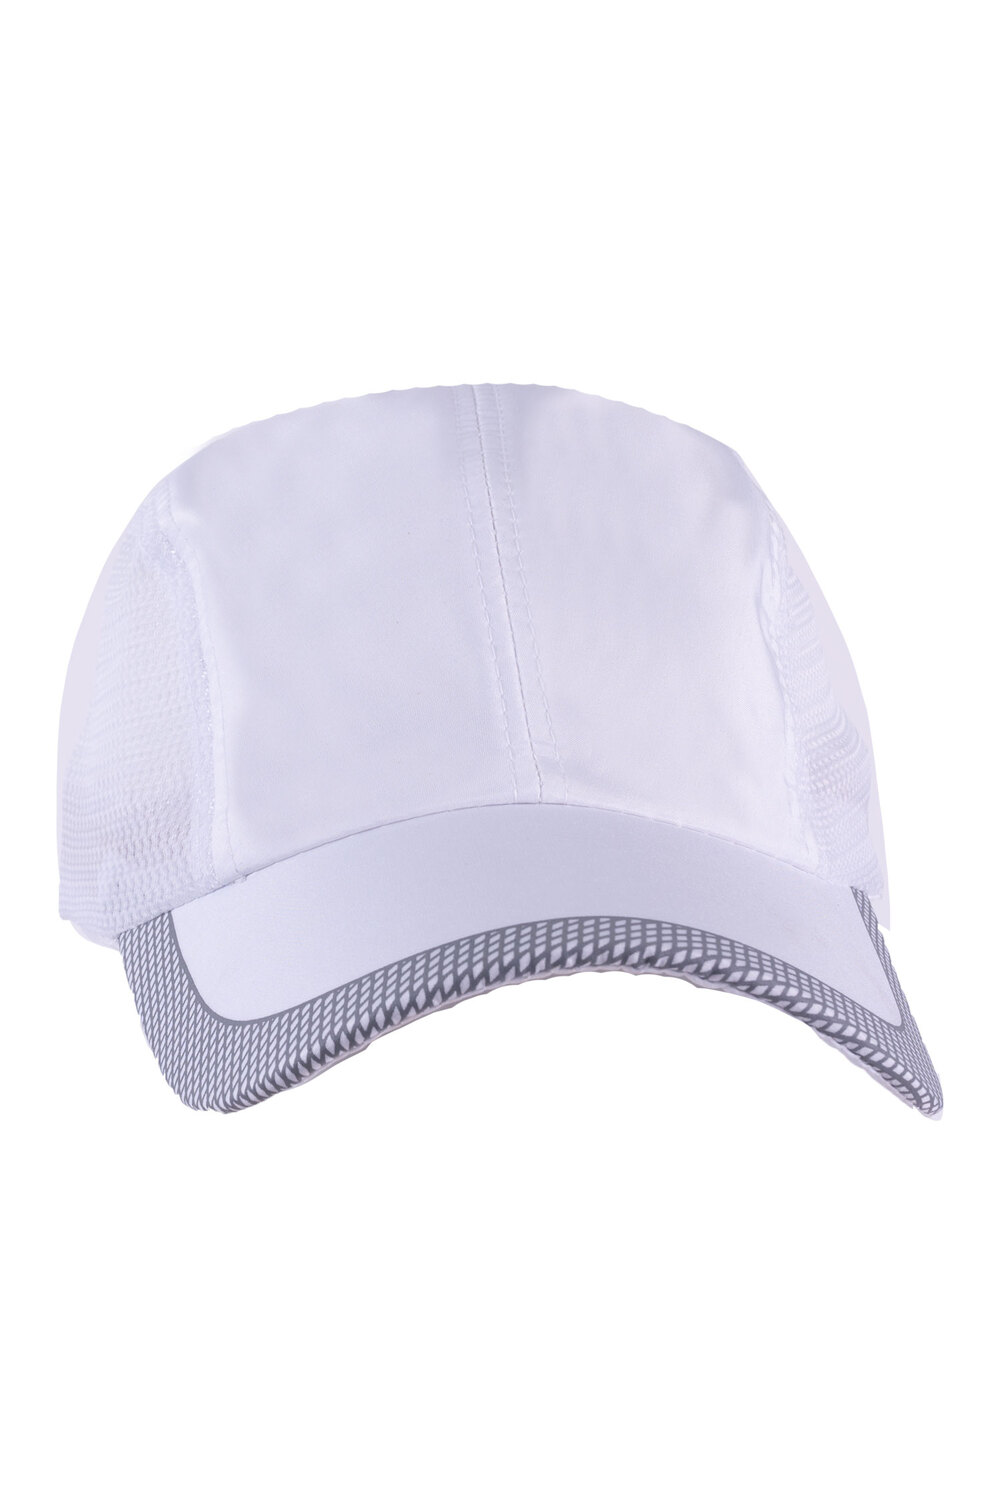 Women's adjustable cap - White